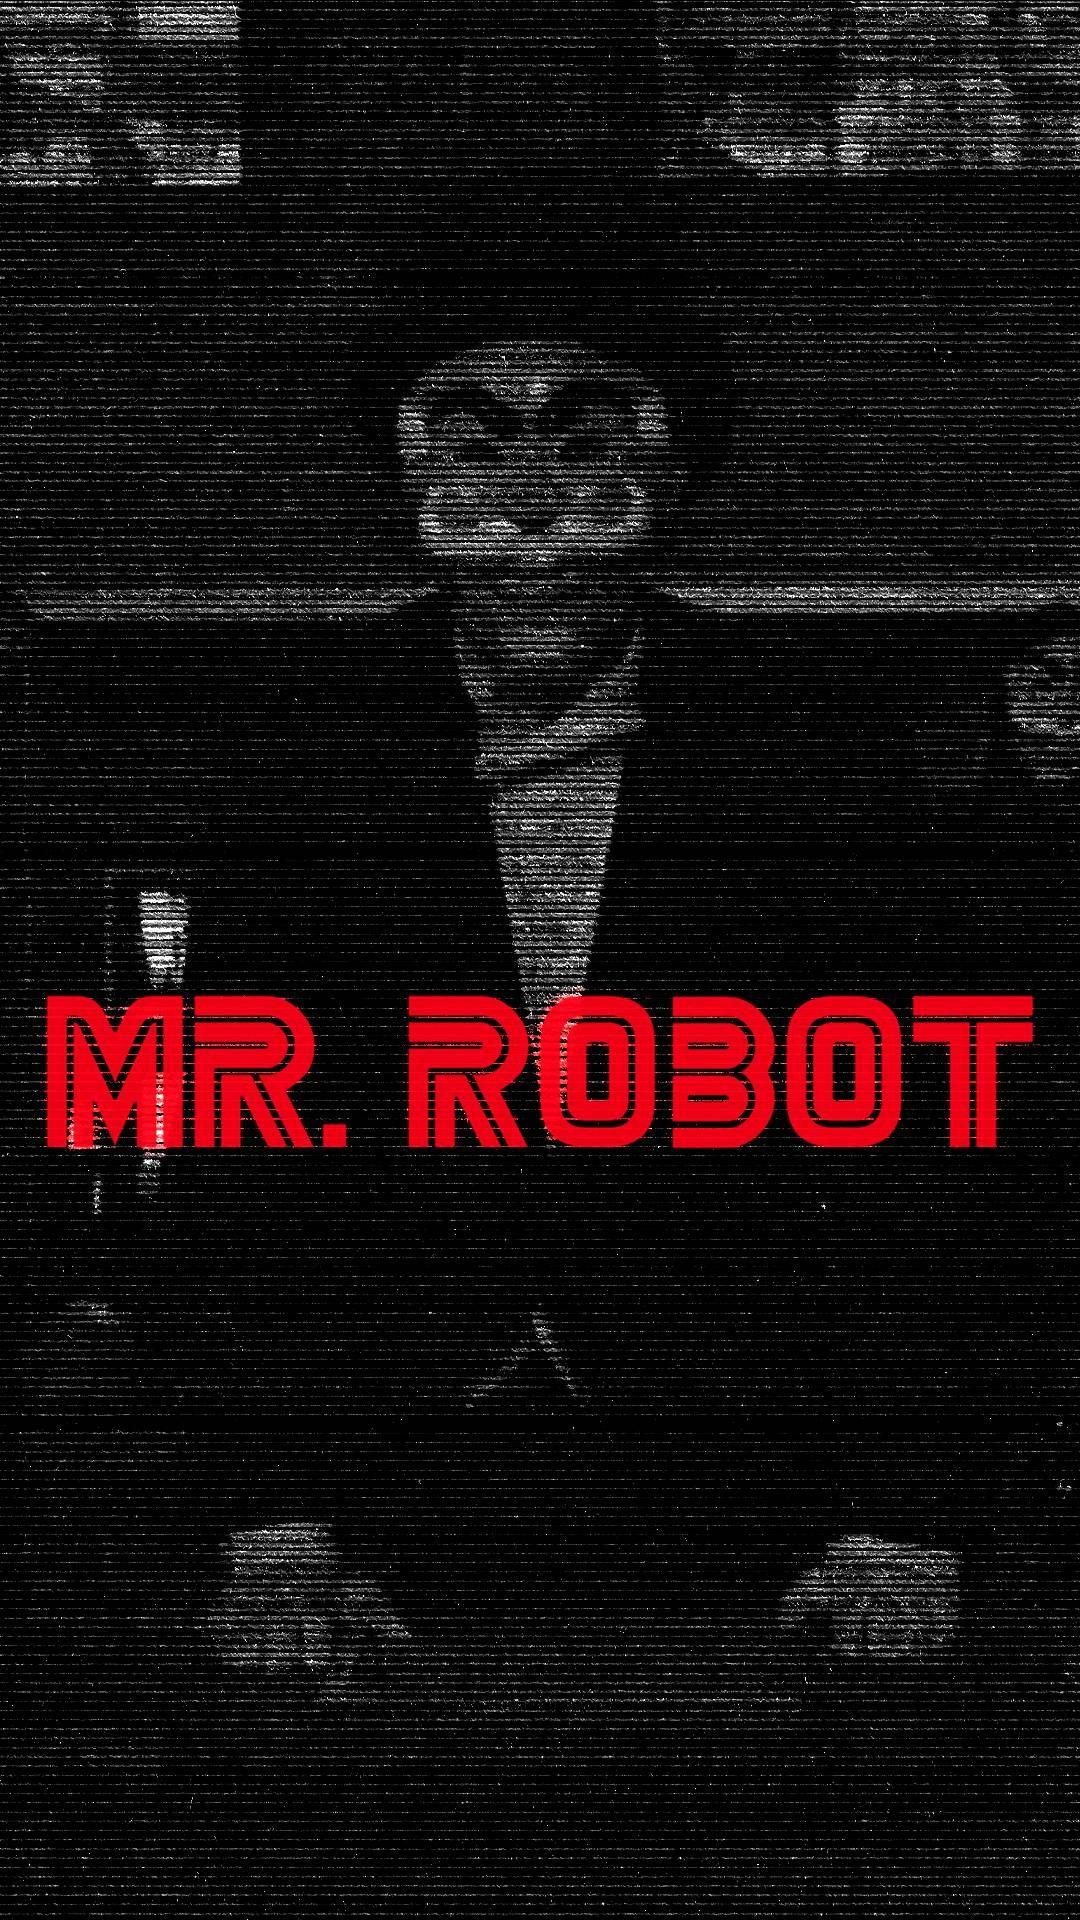 Mr. Robot Wallpaper